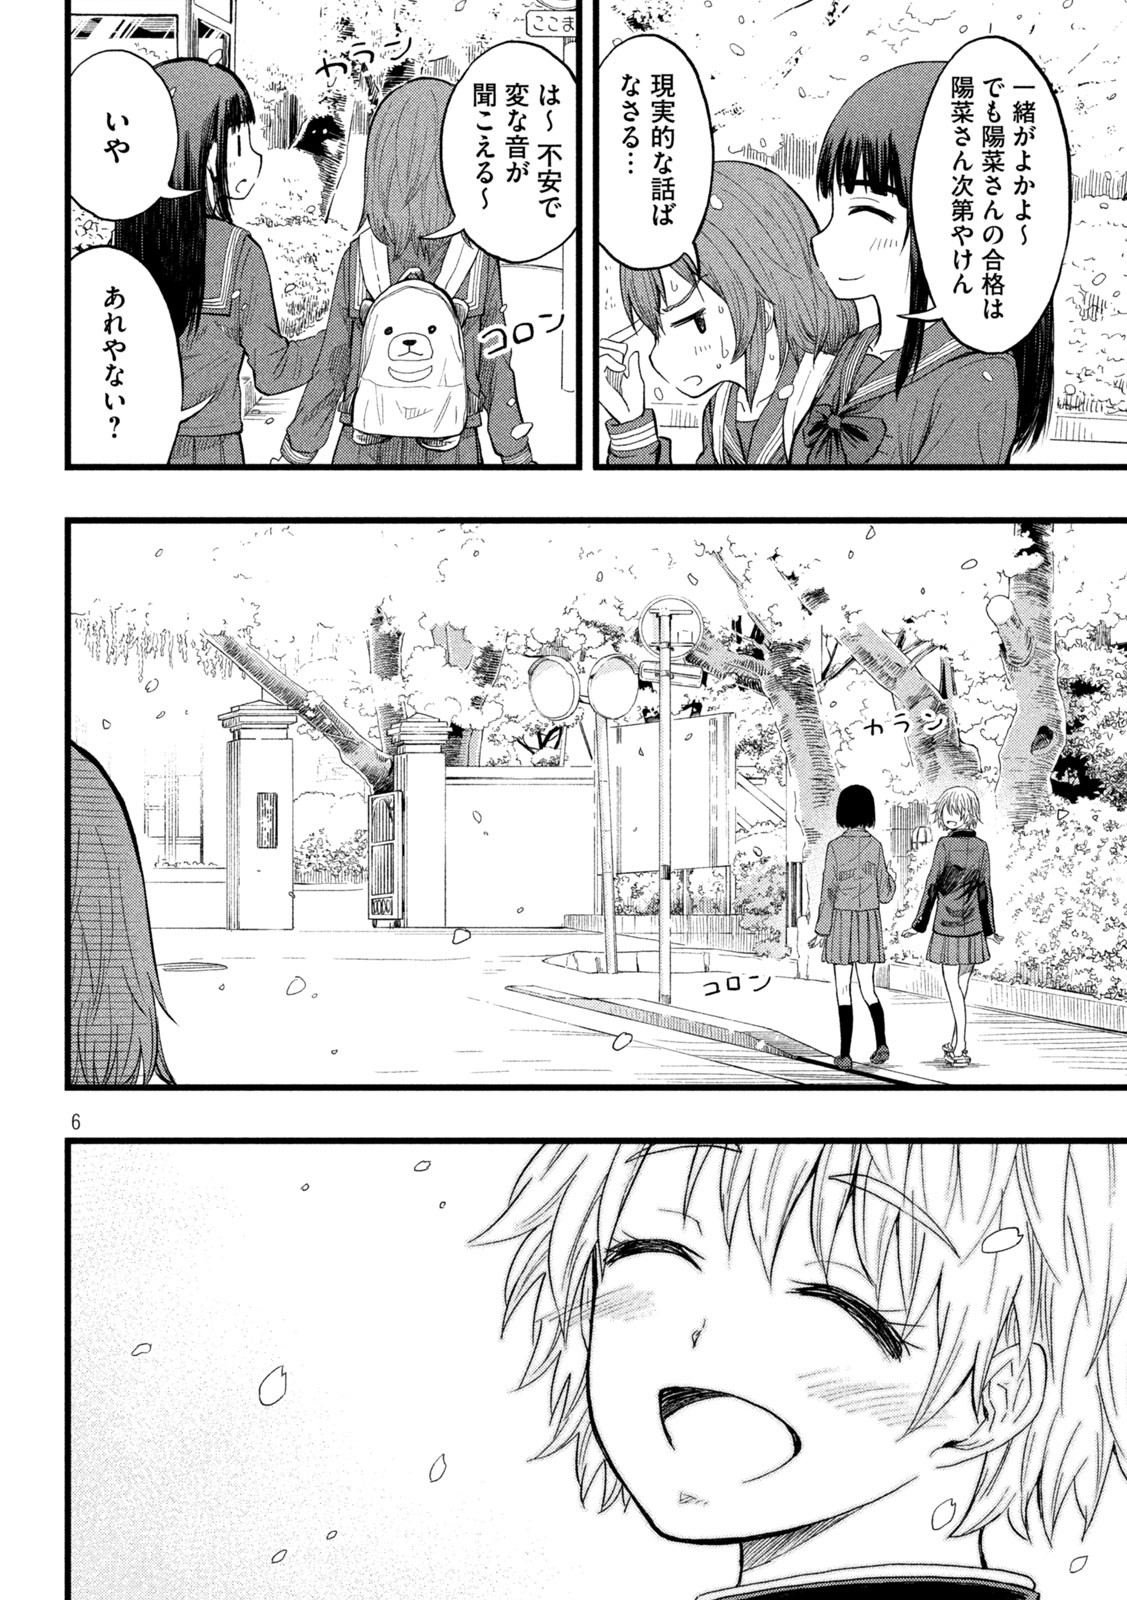 Koharu haru! - Chapter 91 - Page 2